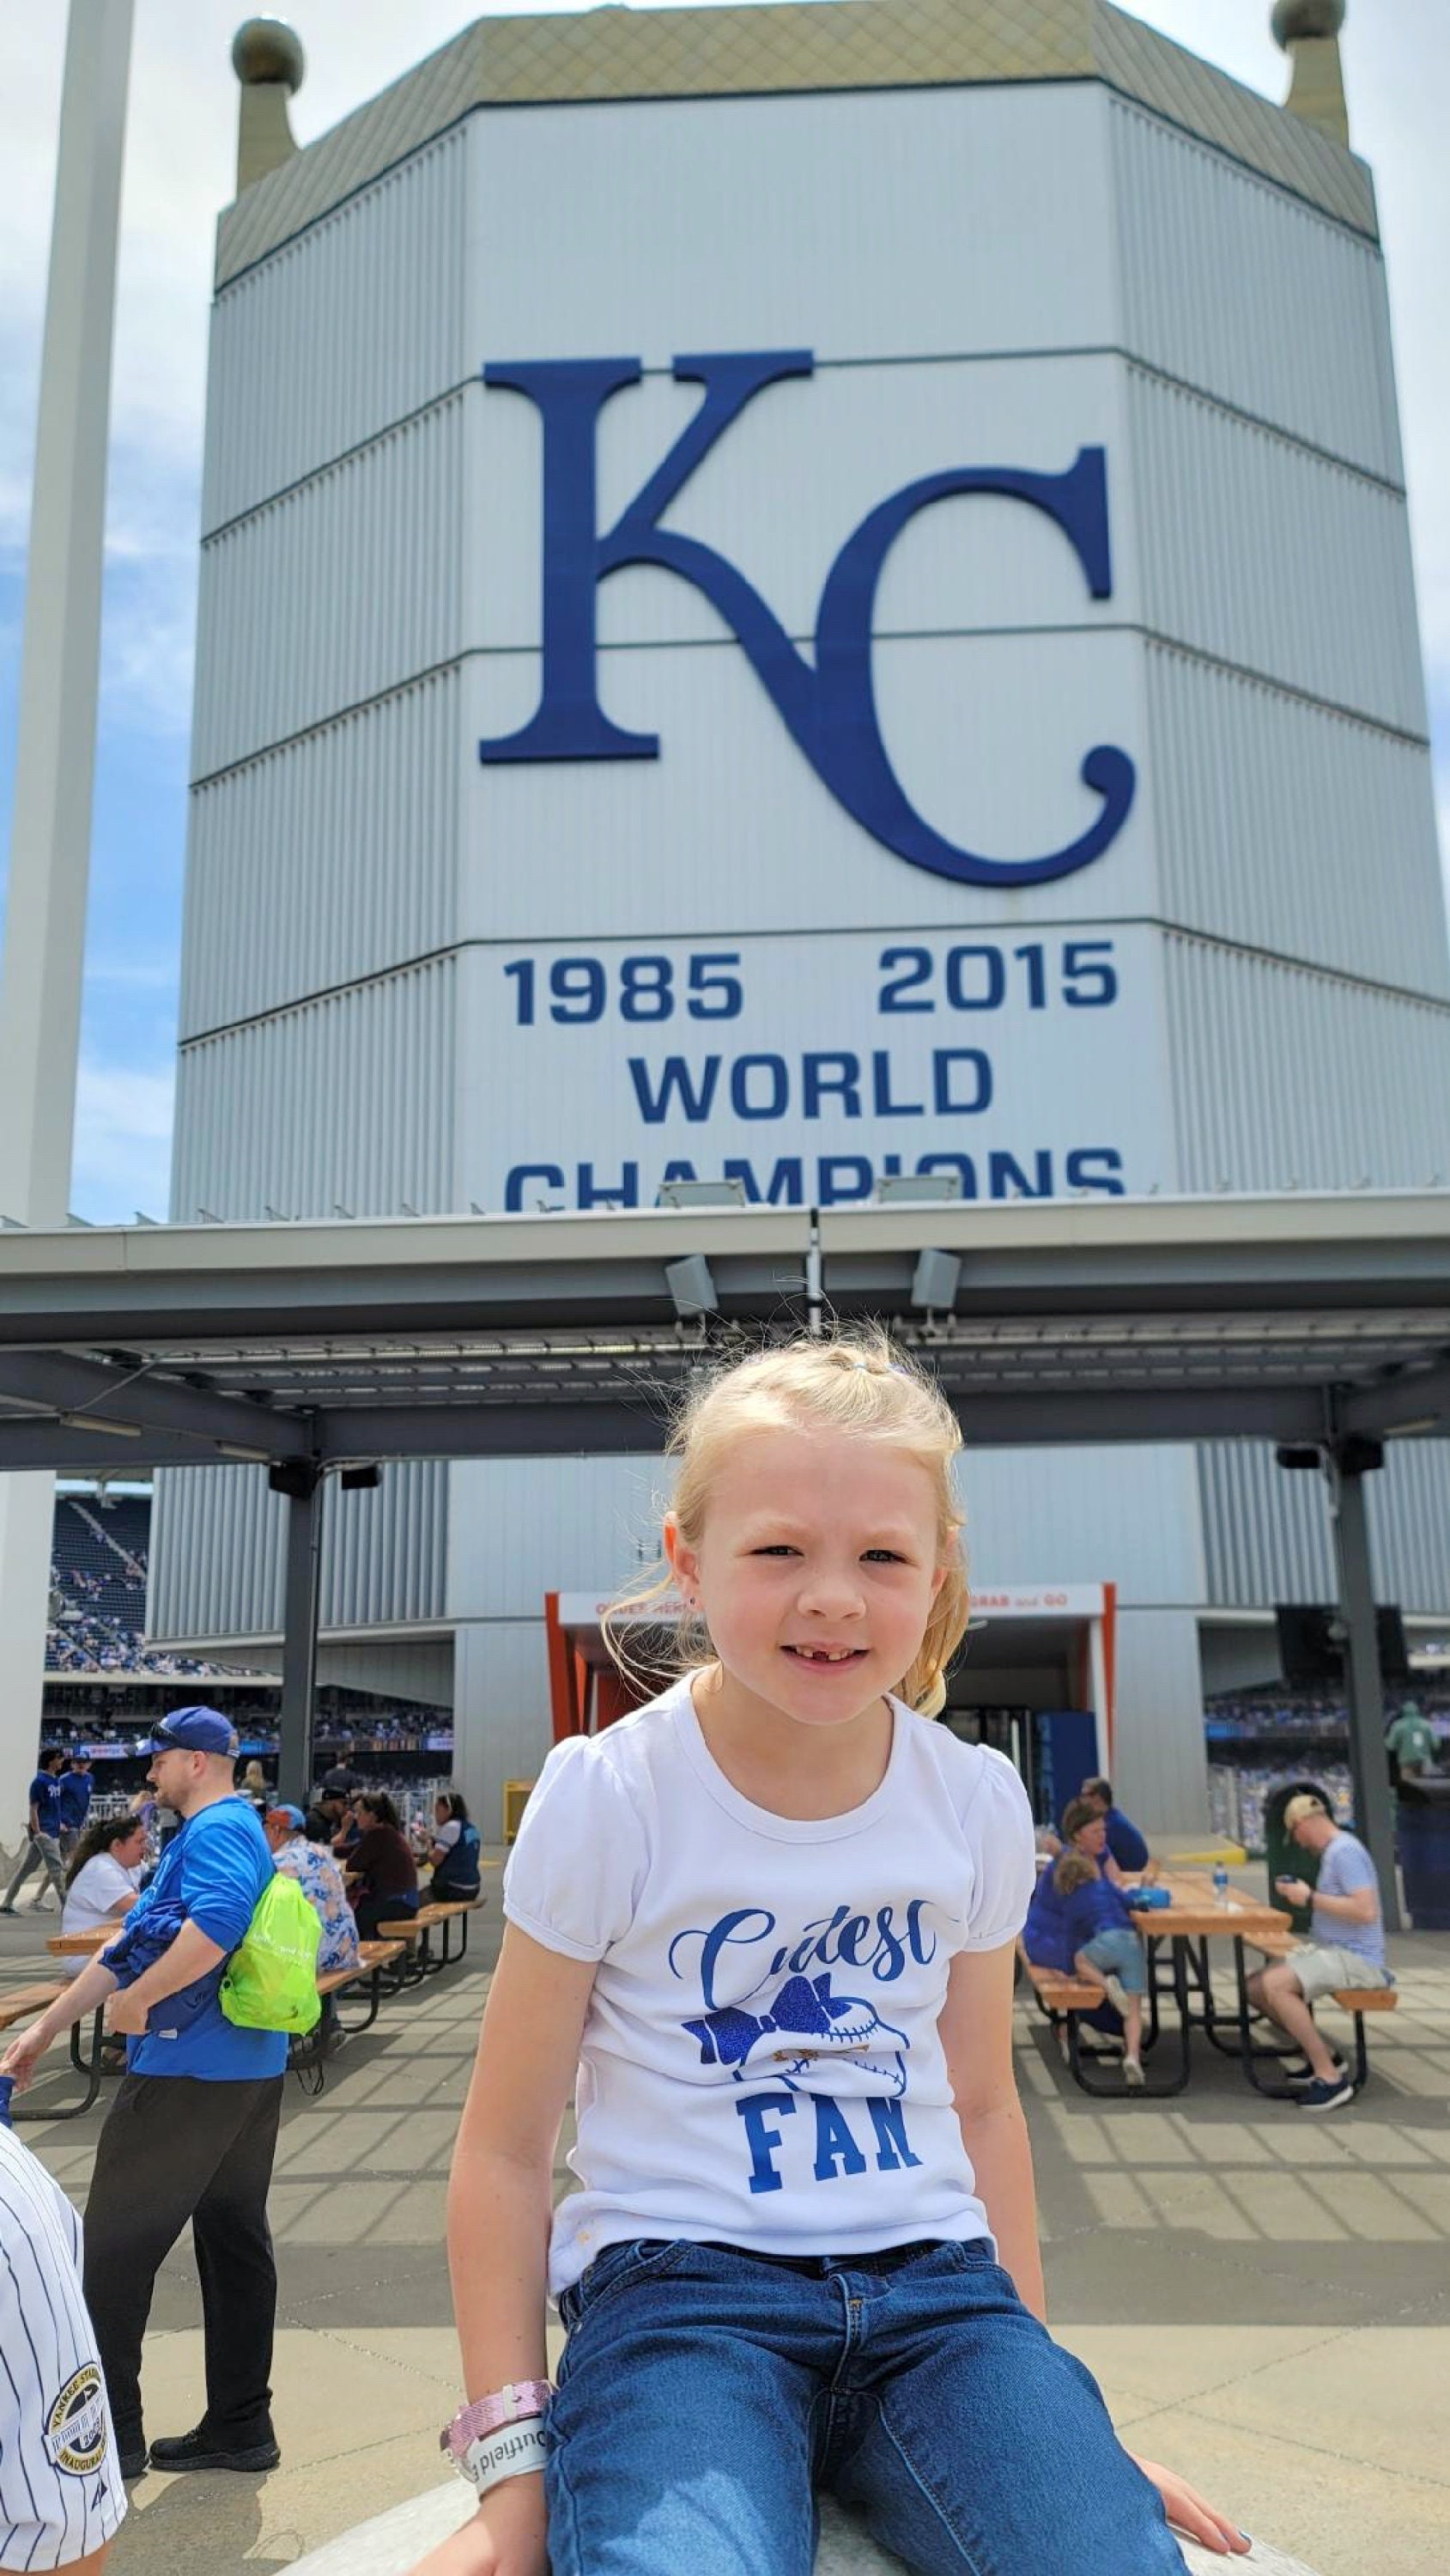 Cutest KC Fan Girl's Kansas City Baseball Shirt KC 